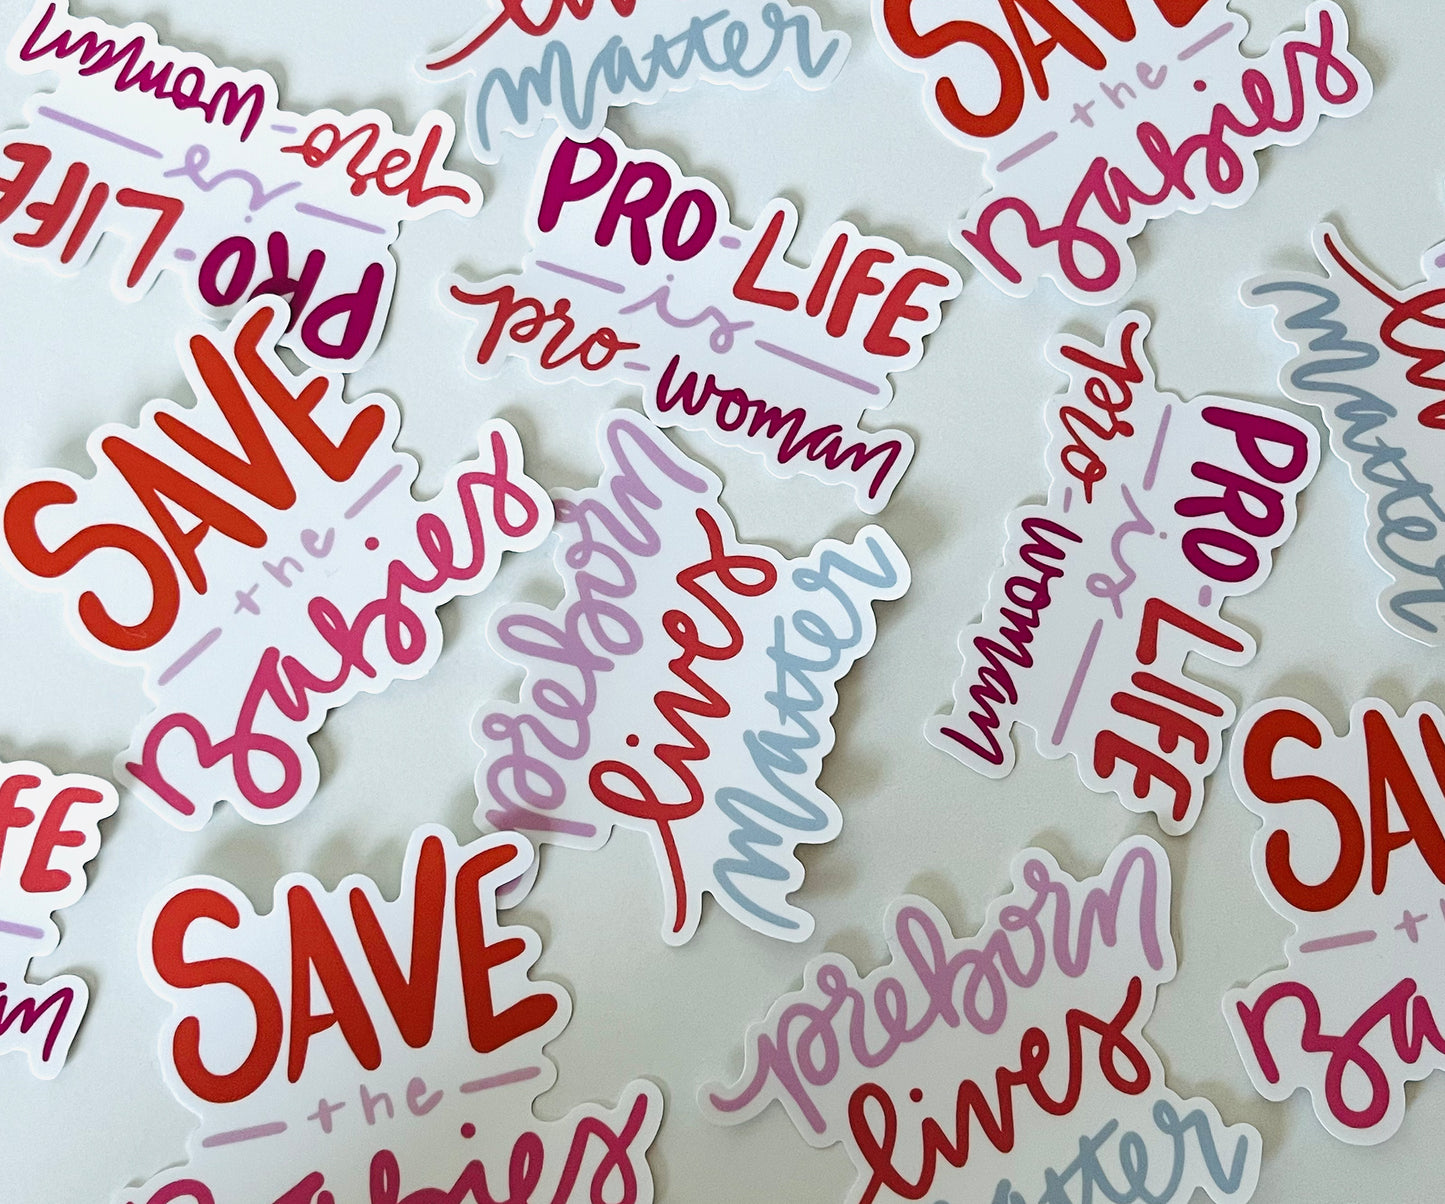 Preborn Lives Matter Sticker | Donation